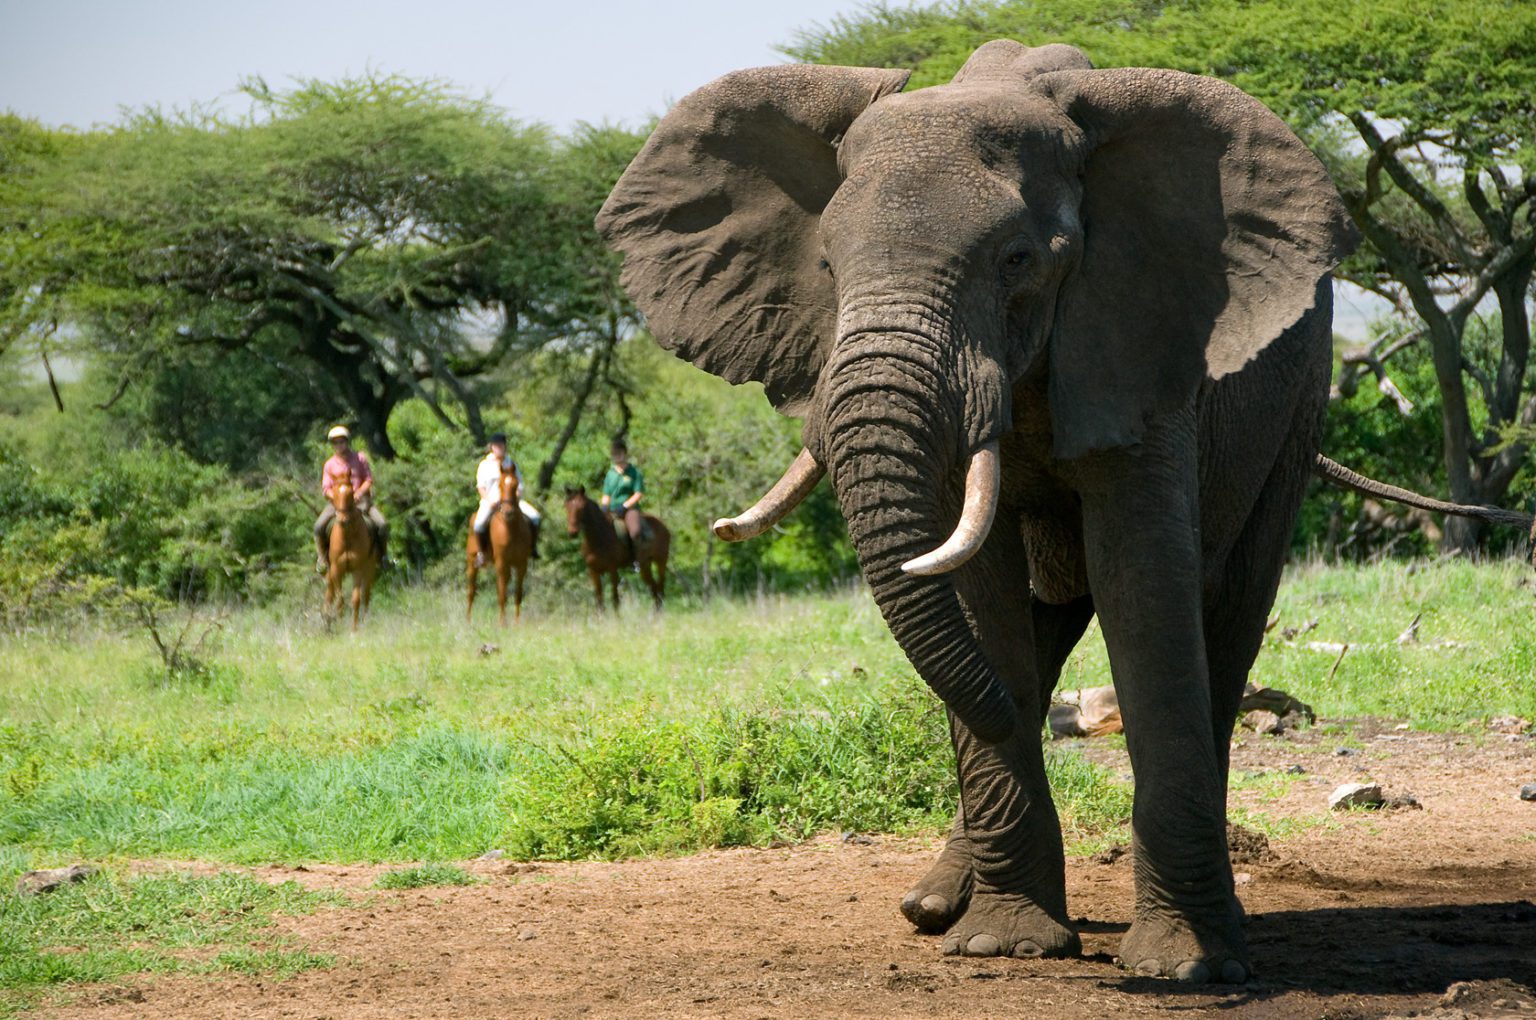 three horseback riders stop to observe a large tusker elephant at Ol Donya in Kenya